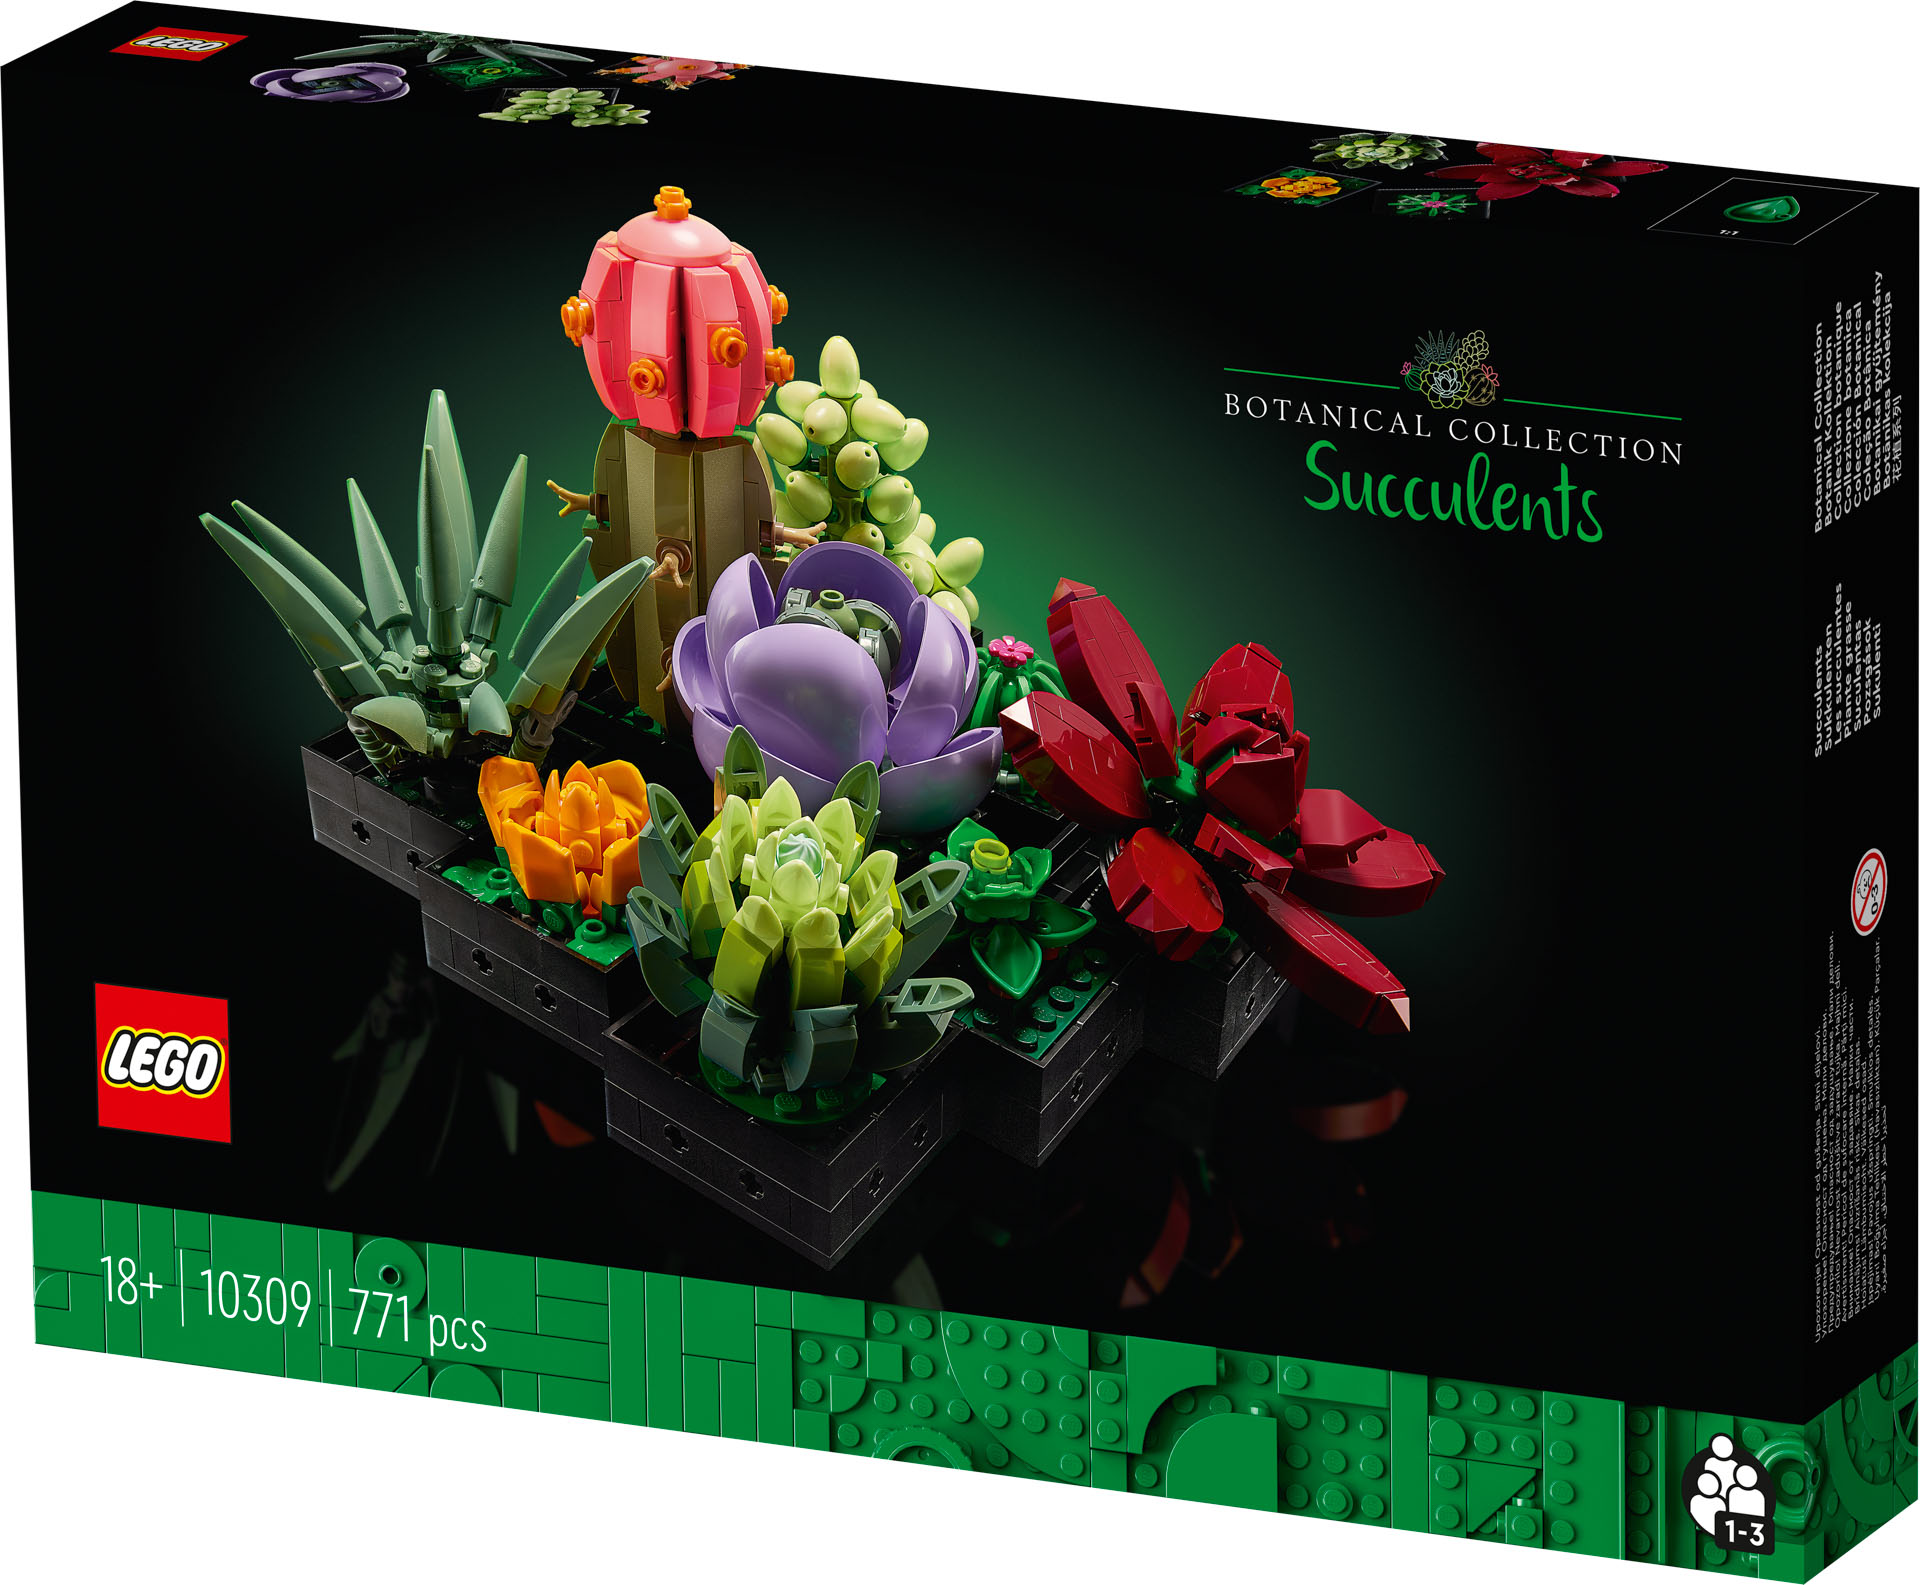 LEGO Botanicals New Release